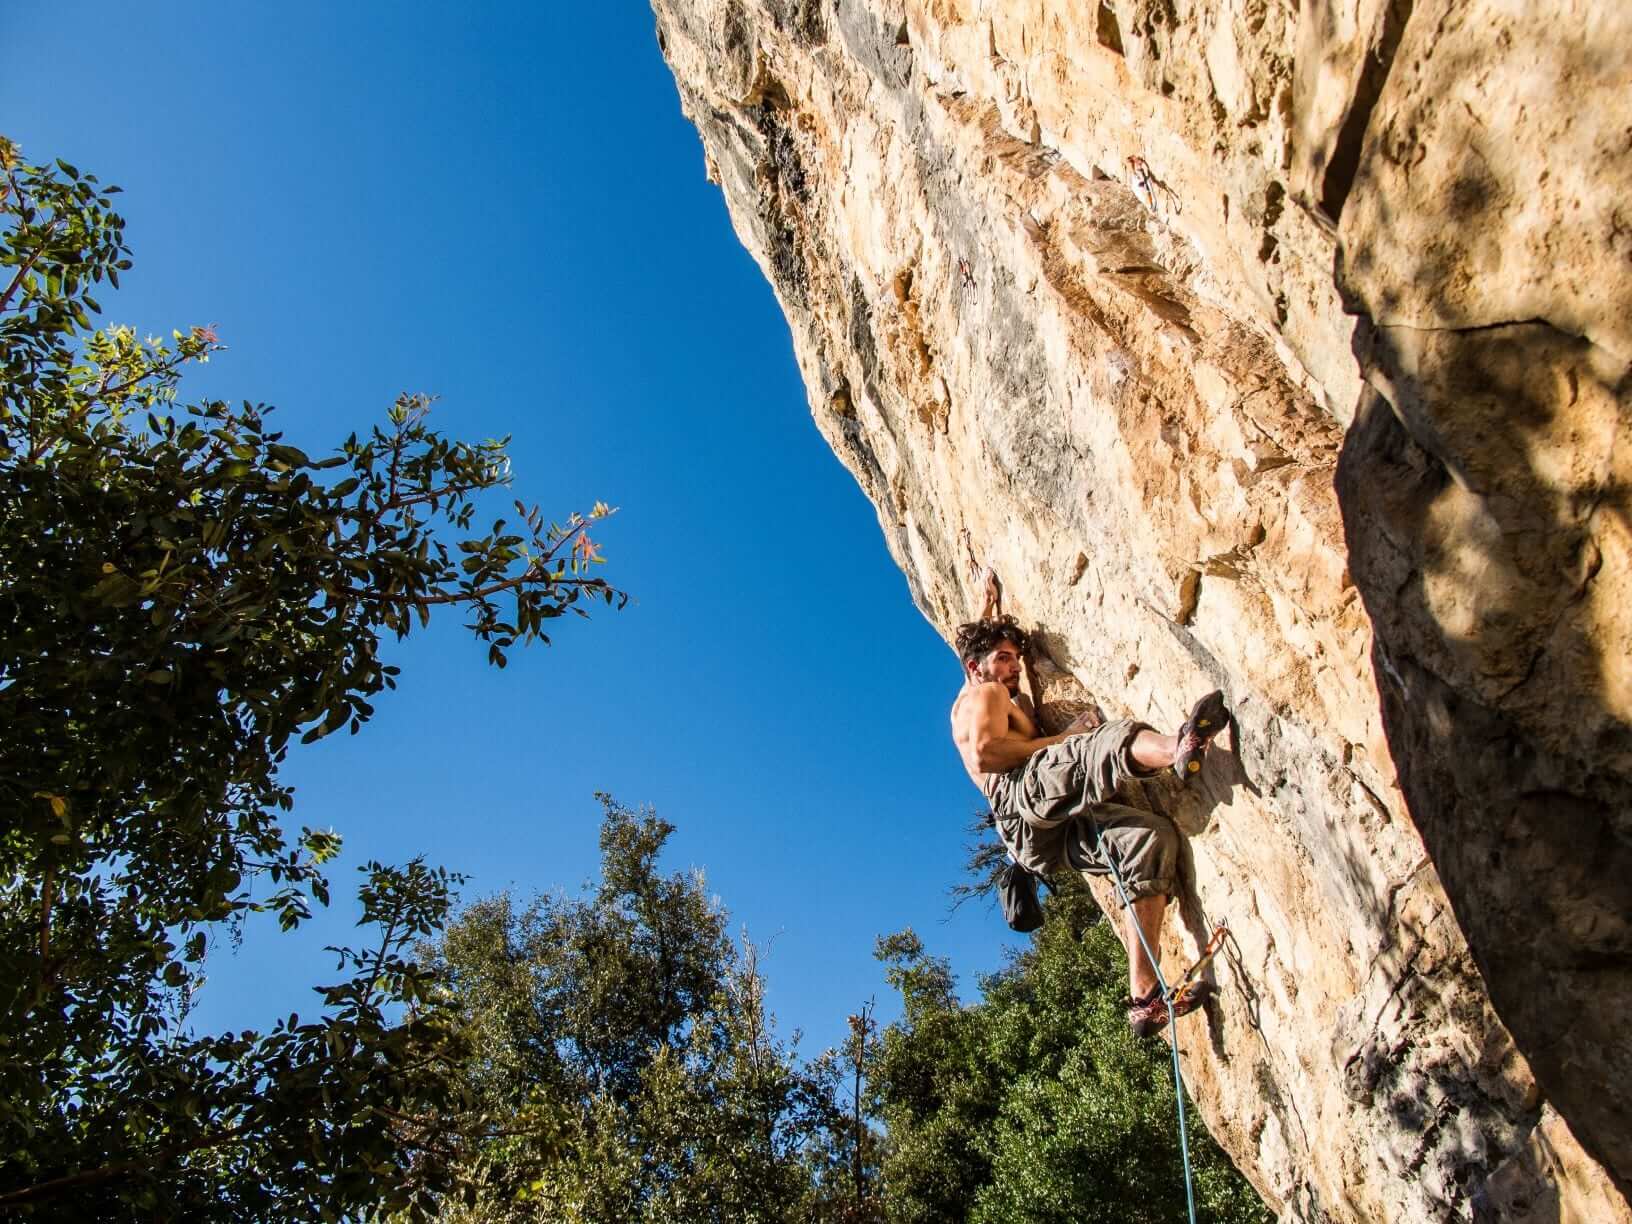 Do You Want To Rock Climb Like A Pro?